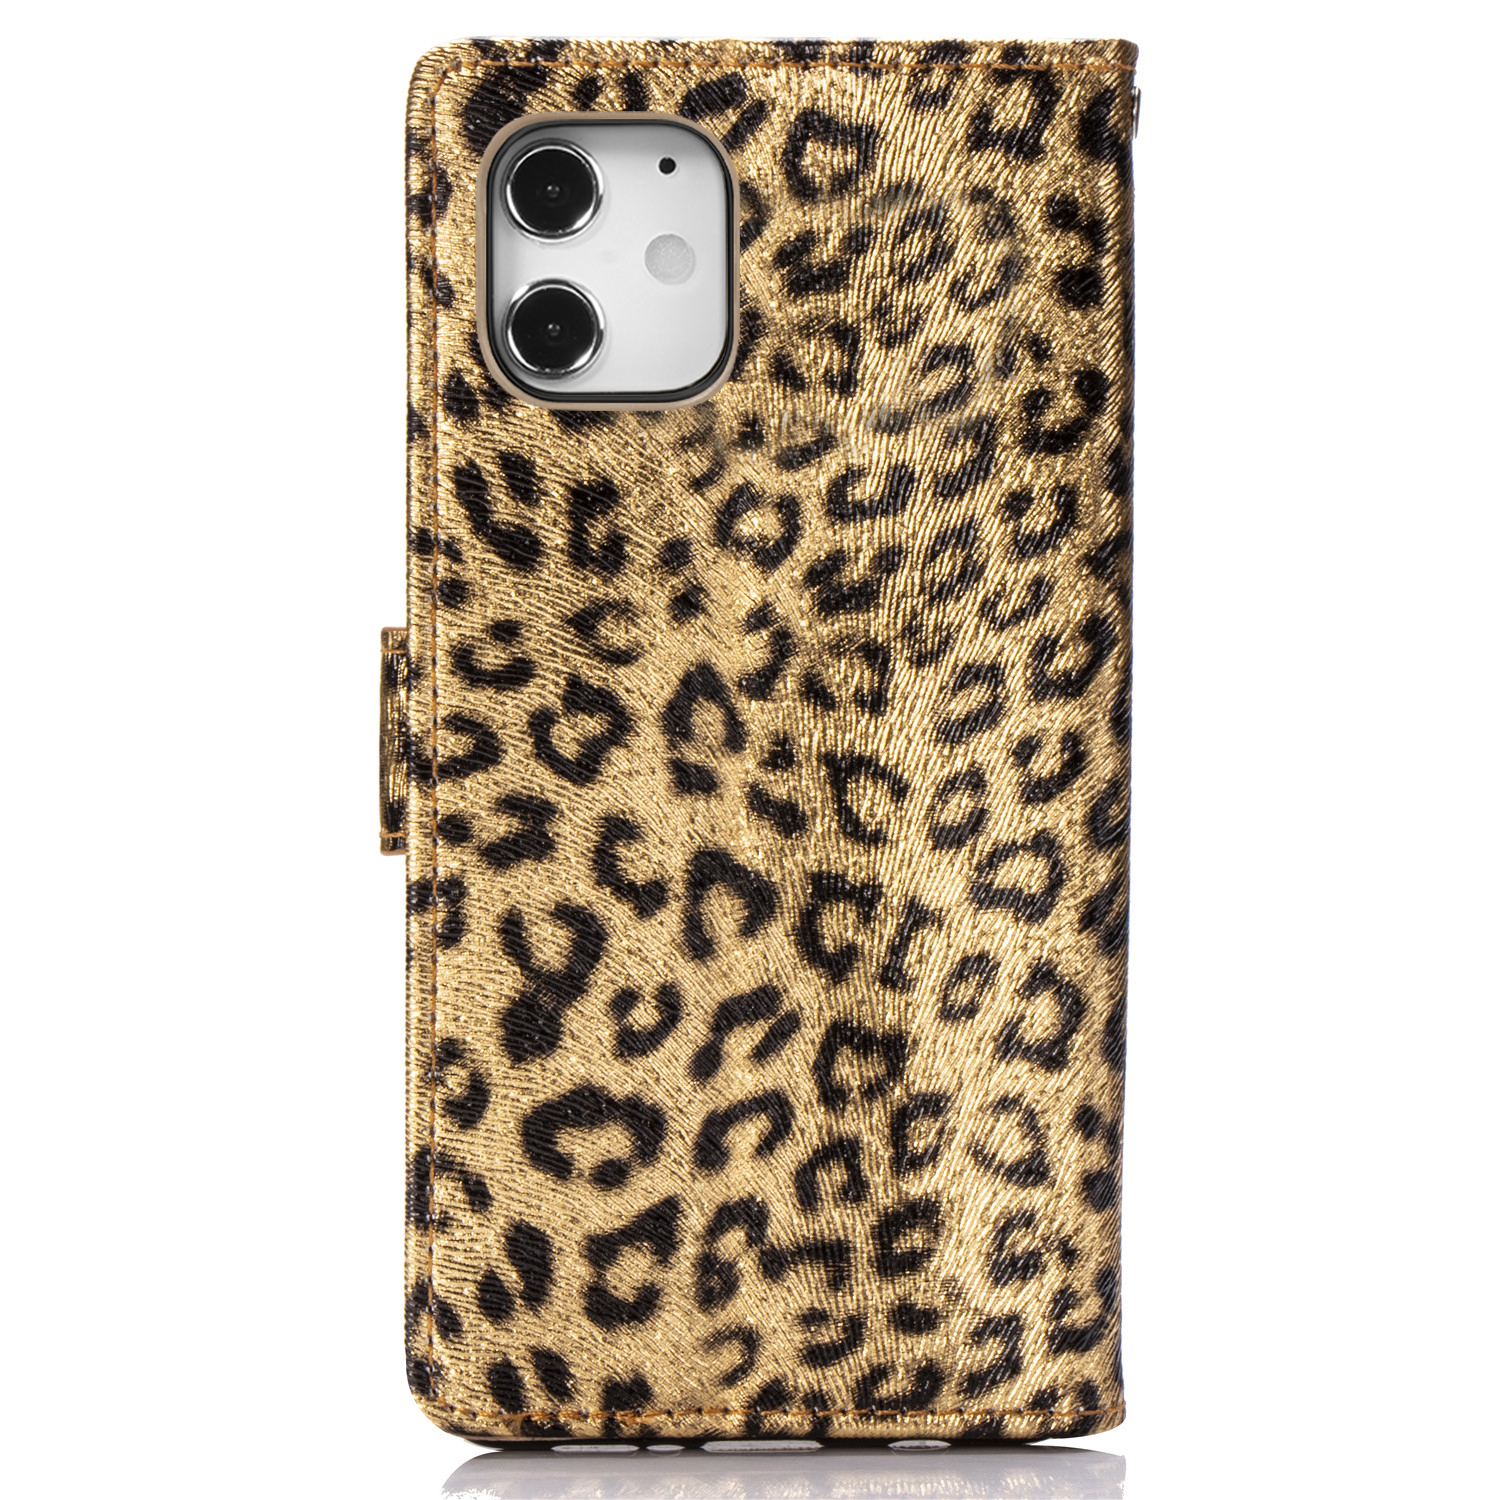 Leopard läderfodral med ställ/kortplats, iPhone 12 Mini, guld